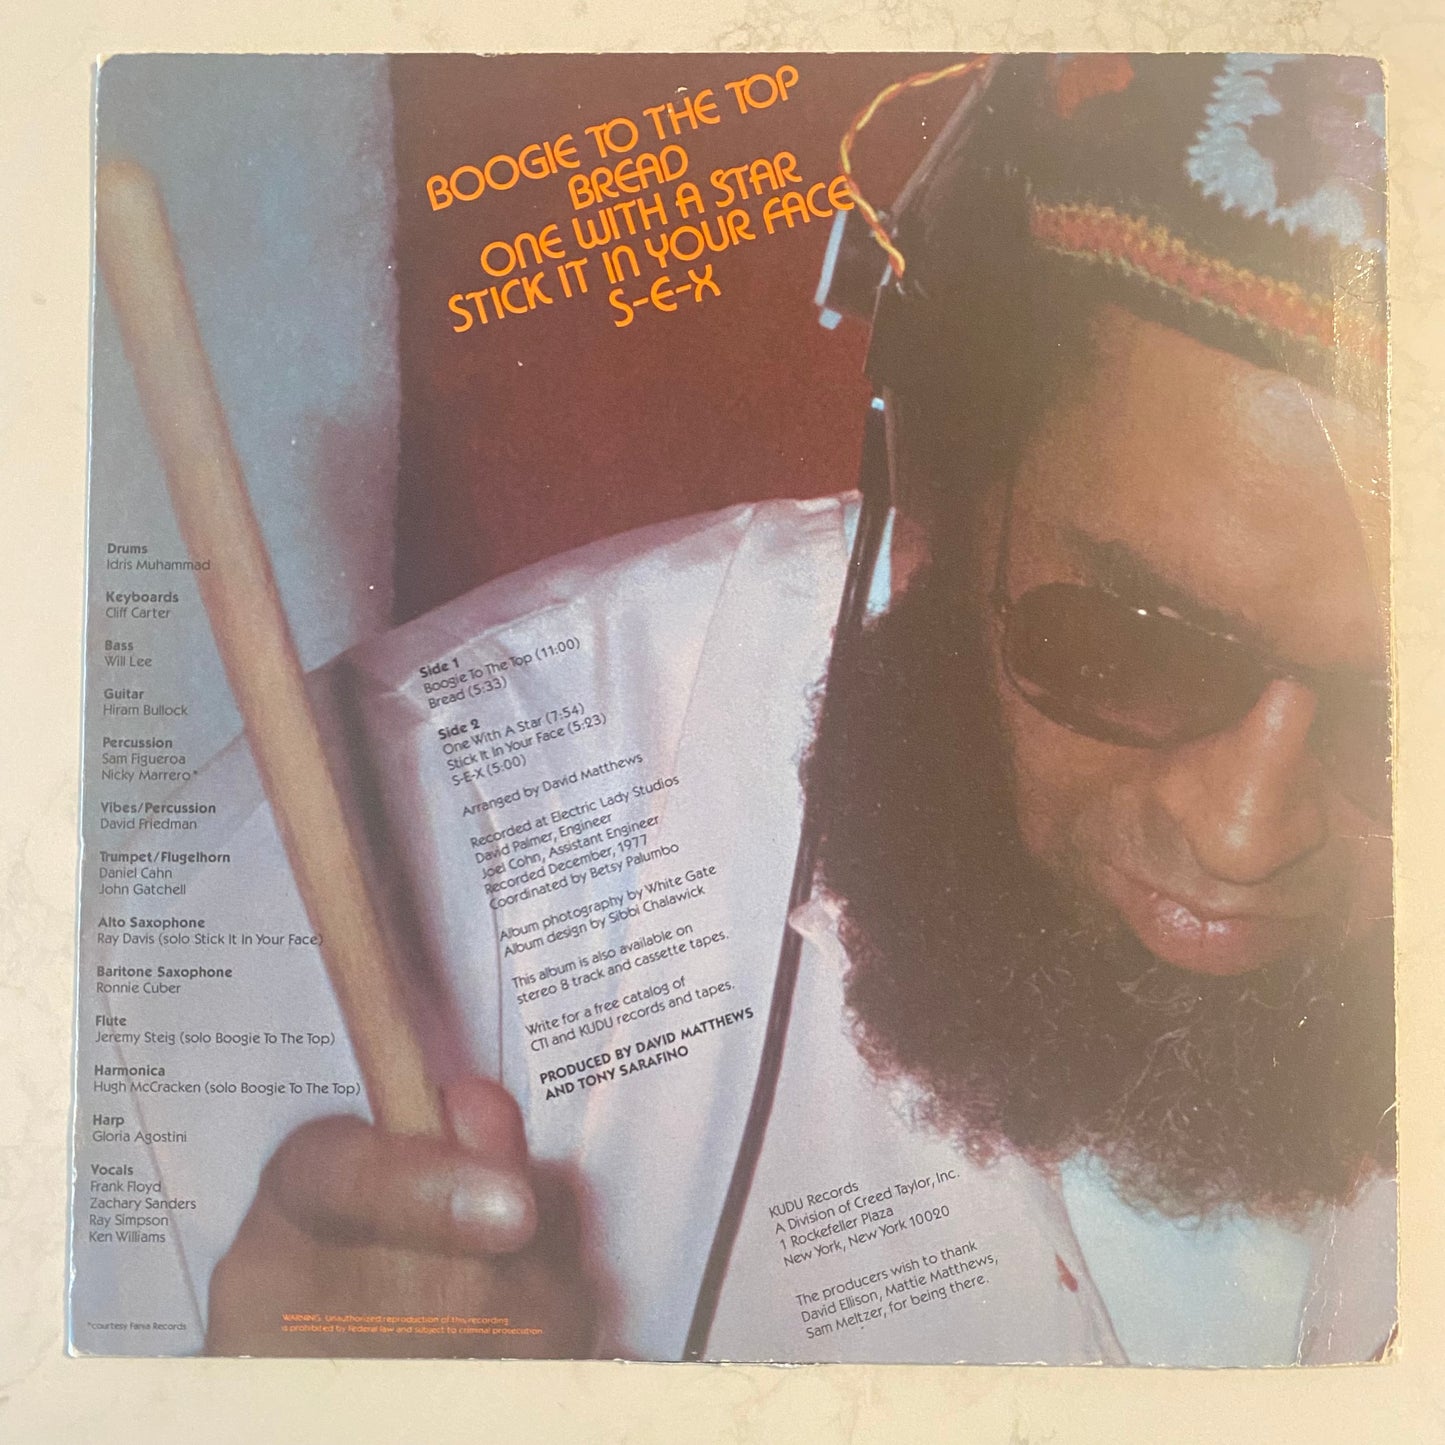 Idris Muhammad - Boogie To The Top (LP, Album, Kee)